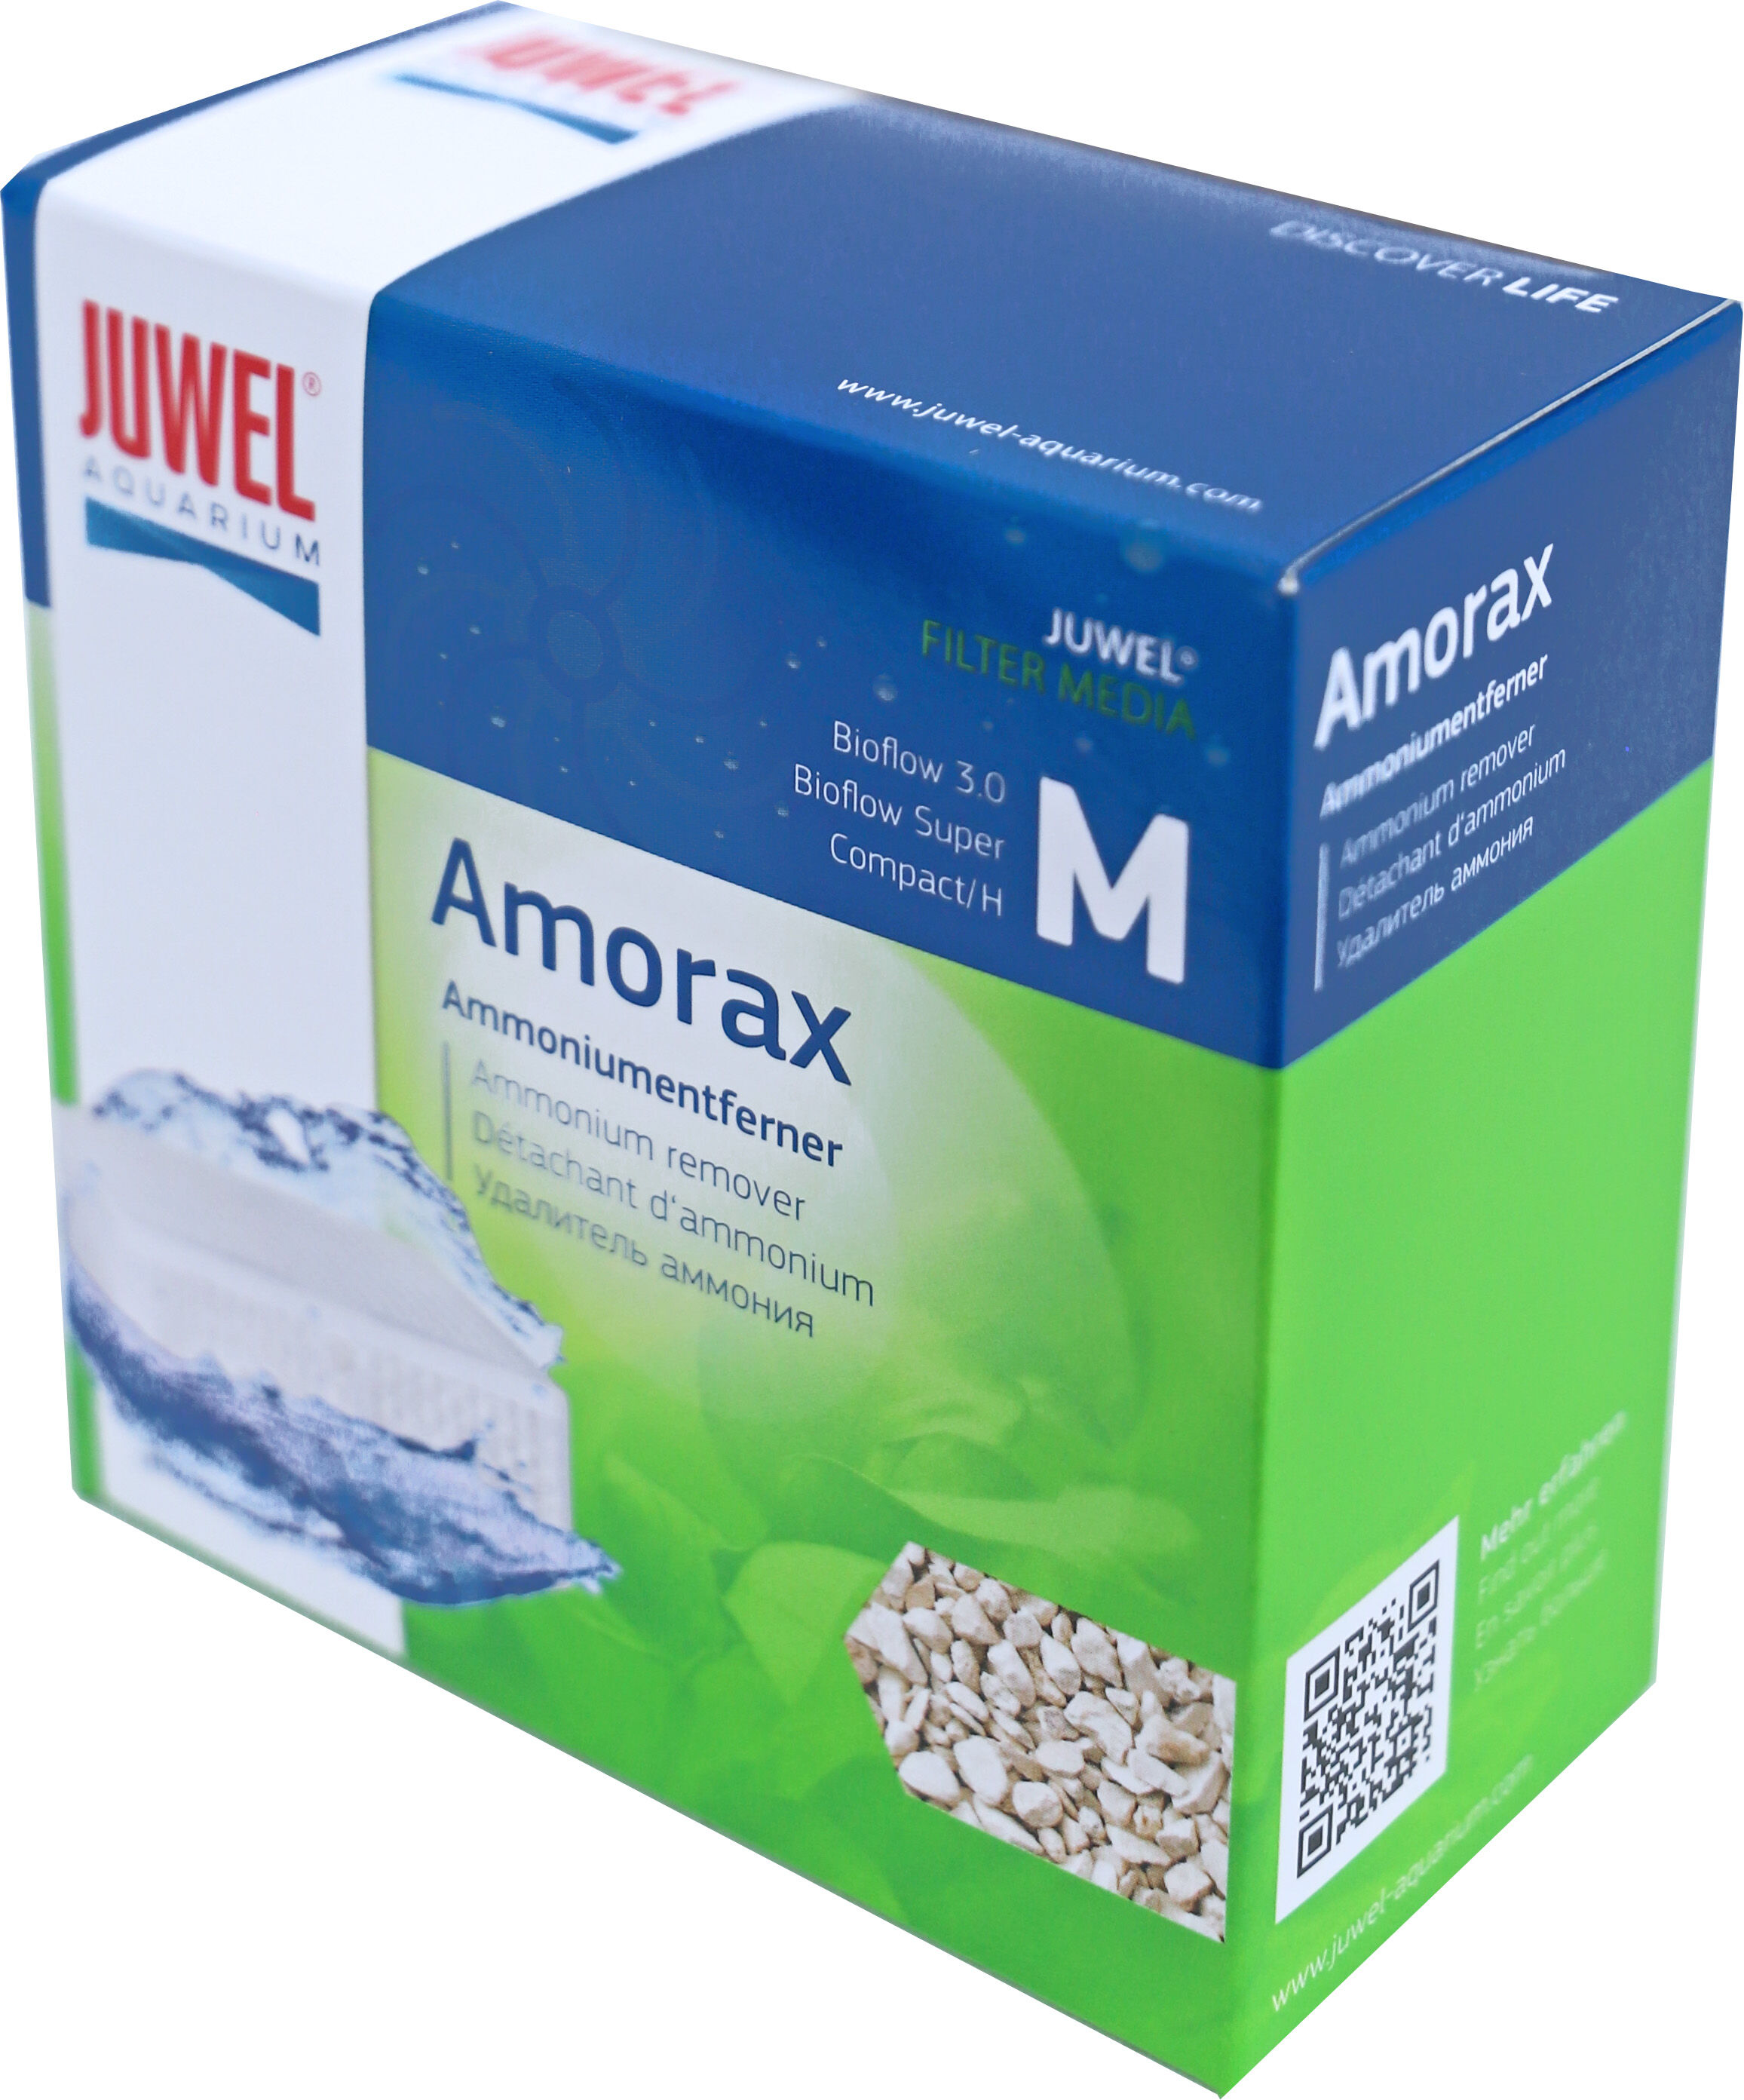 Amorax Bioflow M 3.0/Compact